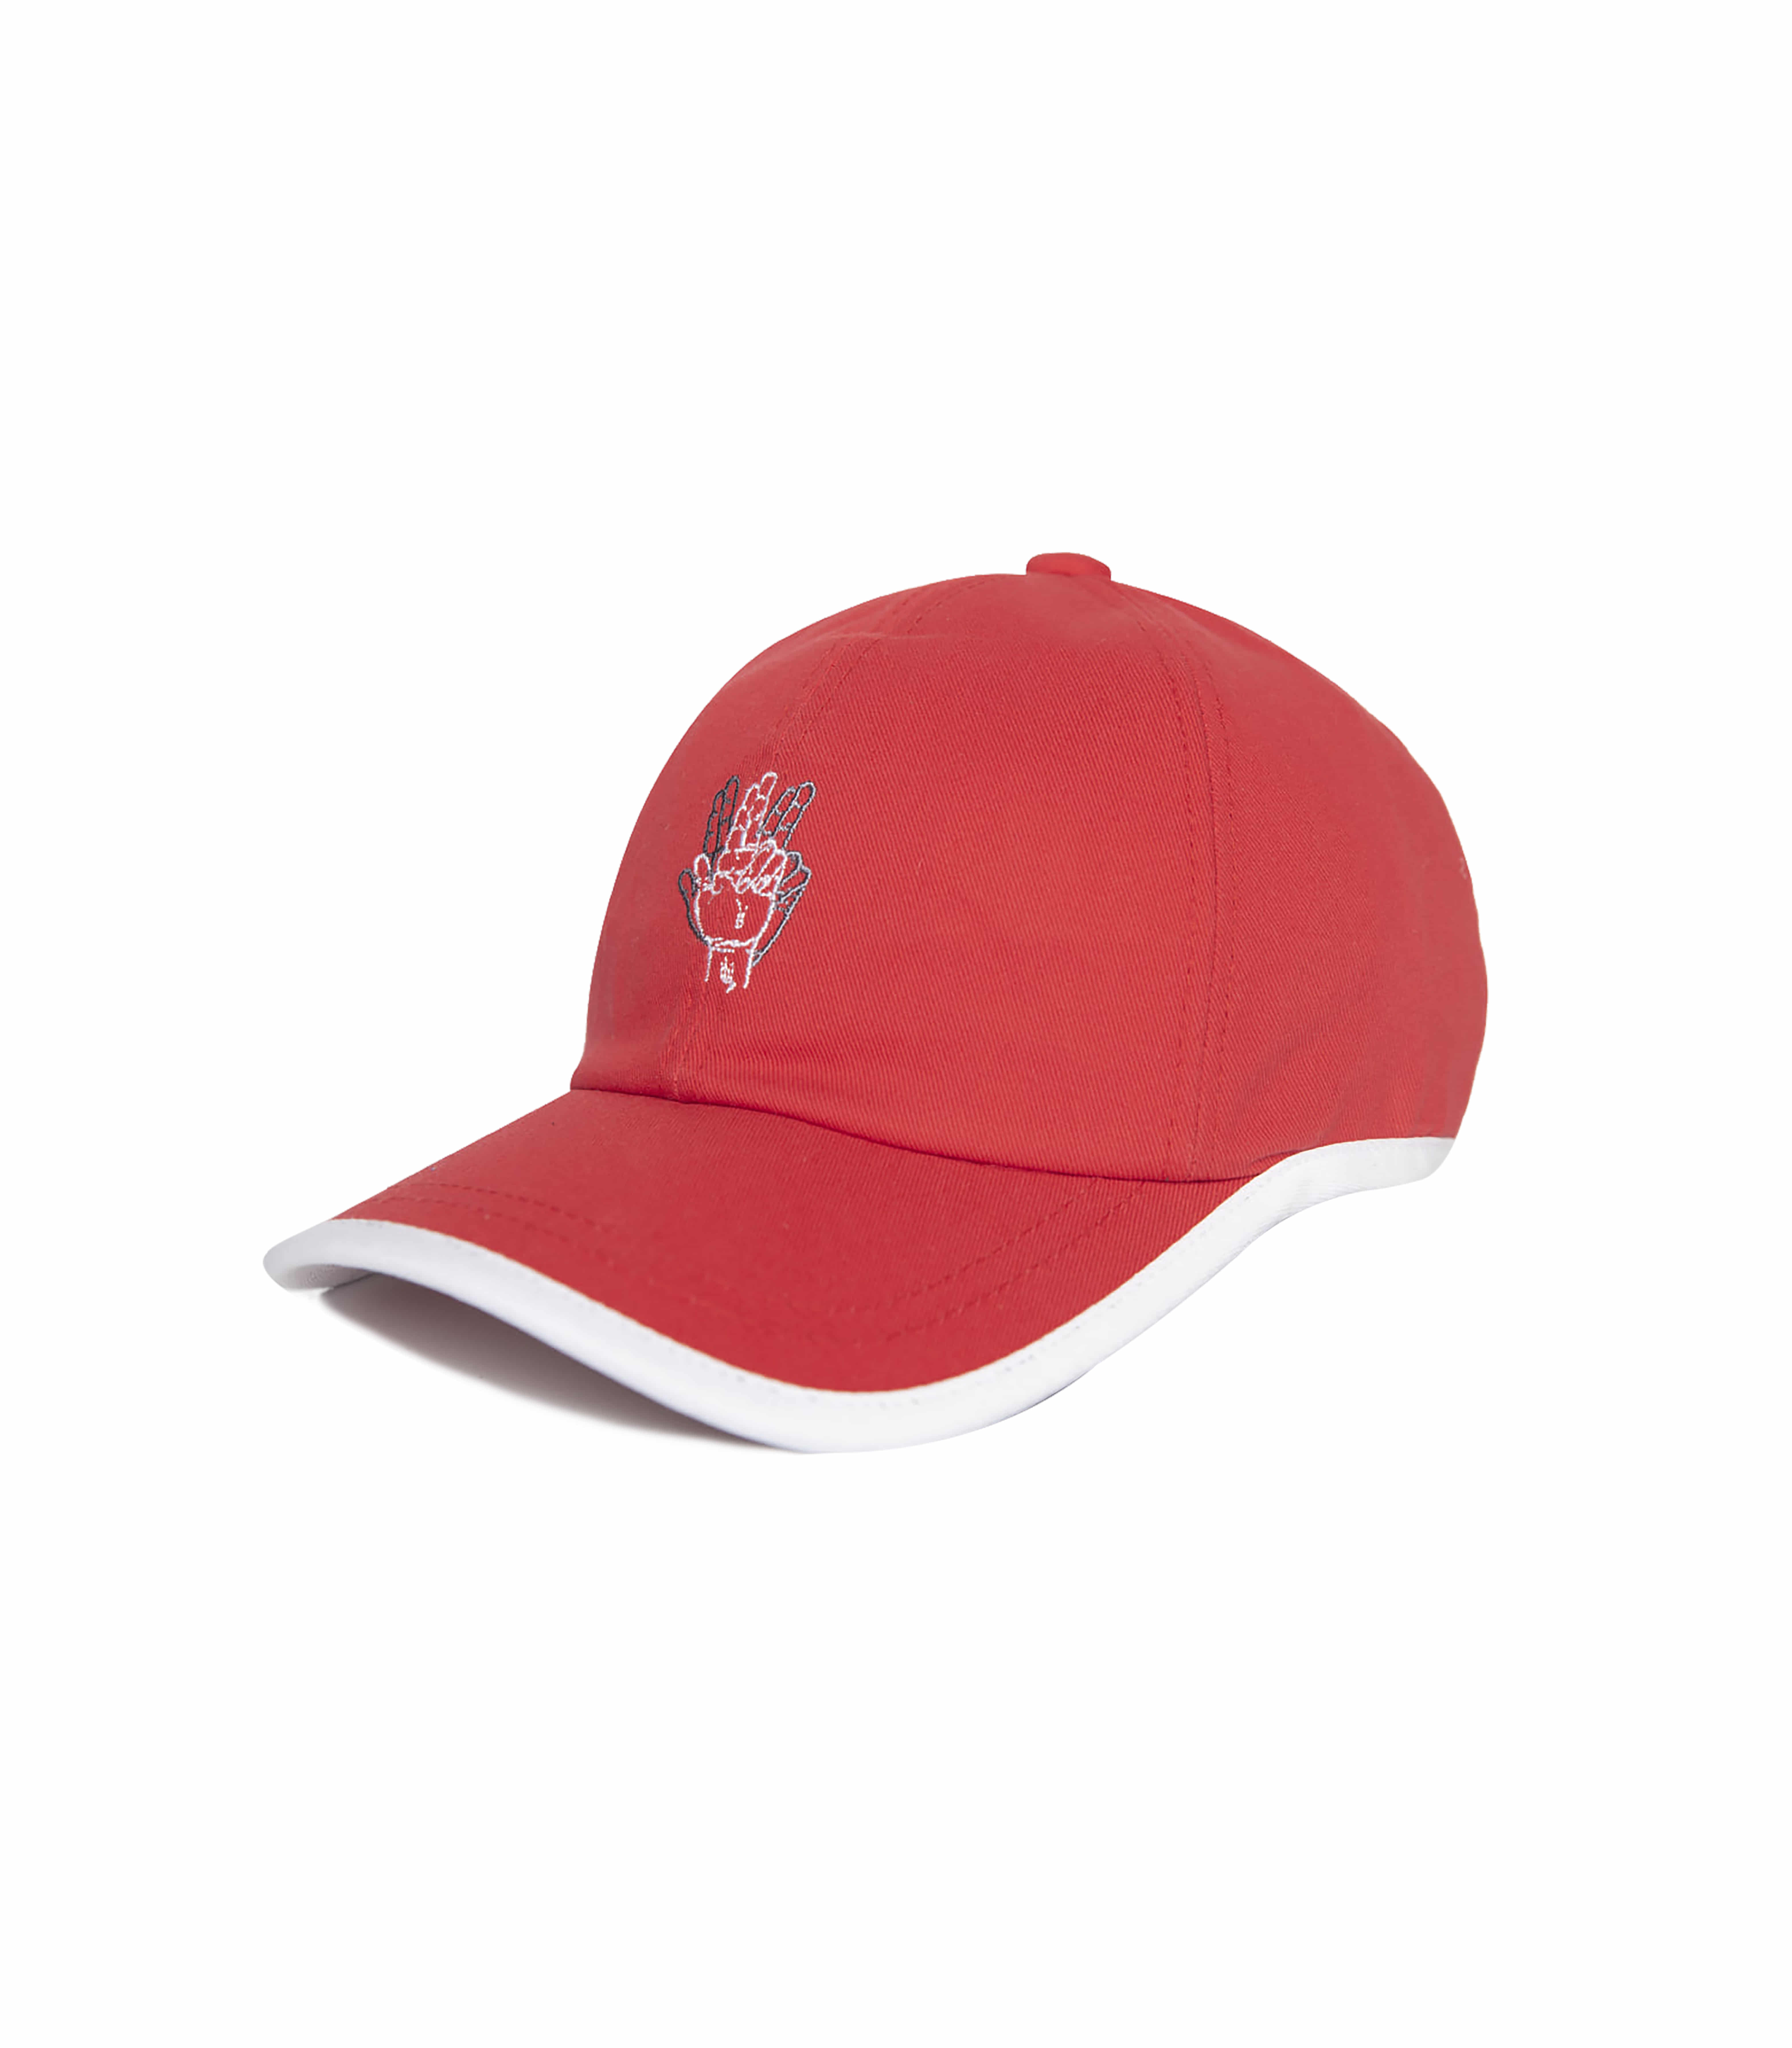 VIBRATEKIDS - ROUND PATCH HAND LOGO BALL CAP (RED)